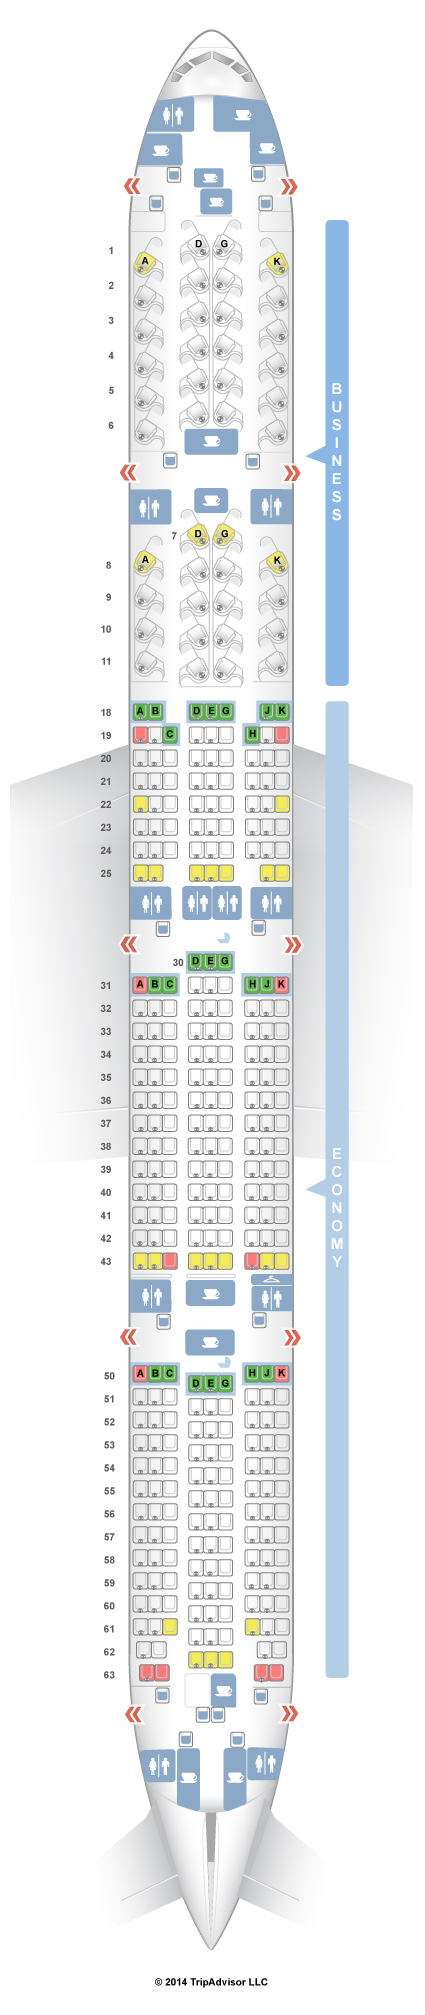 Air Canada Flight 877 Seating Chart